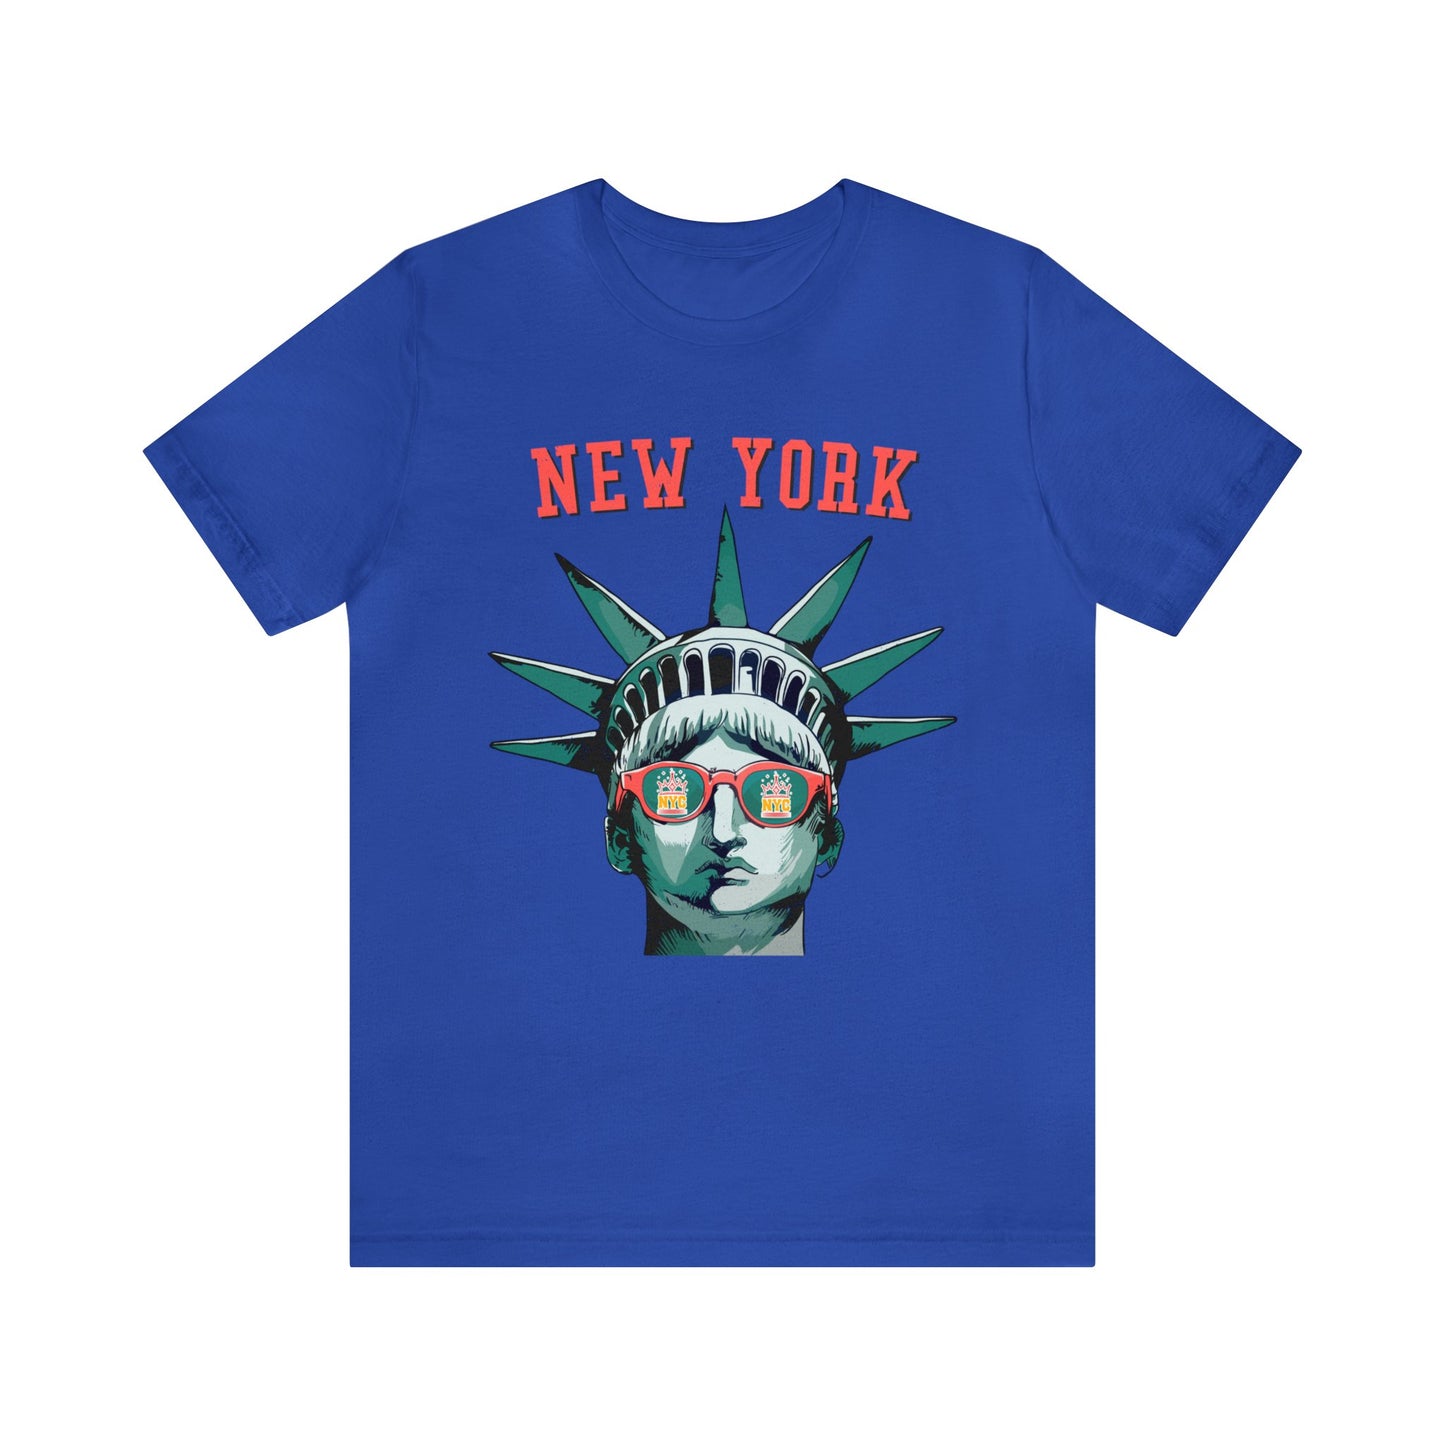 'NEW YORK' TEE